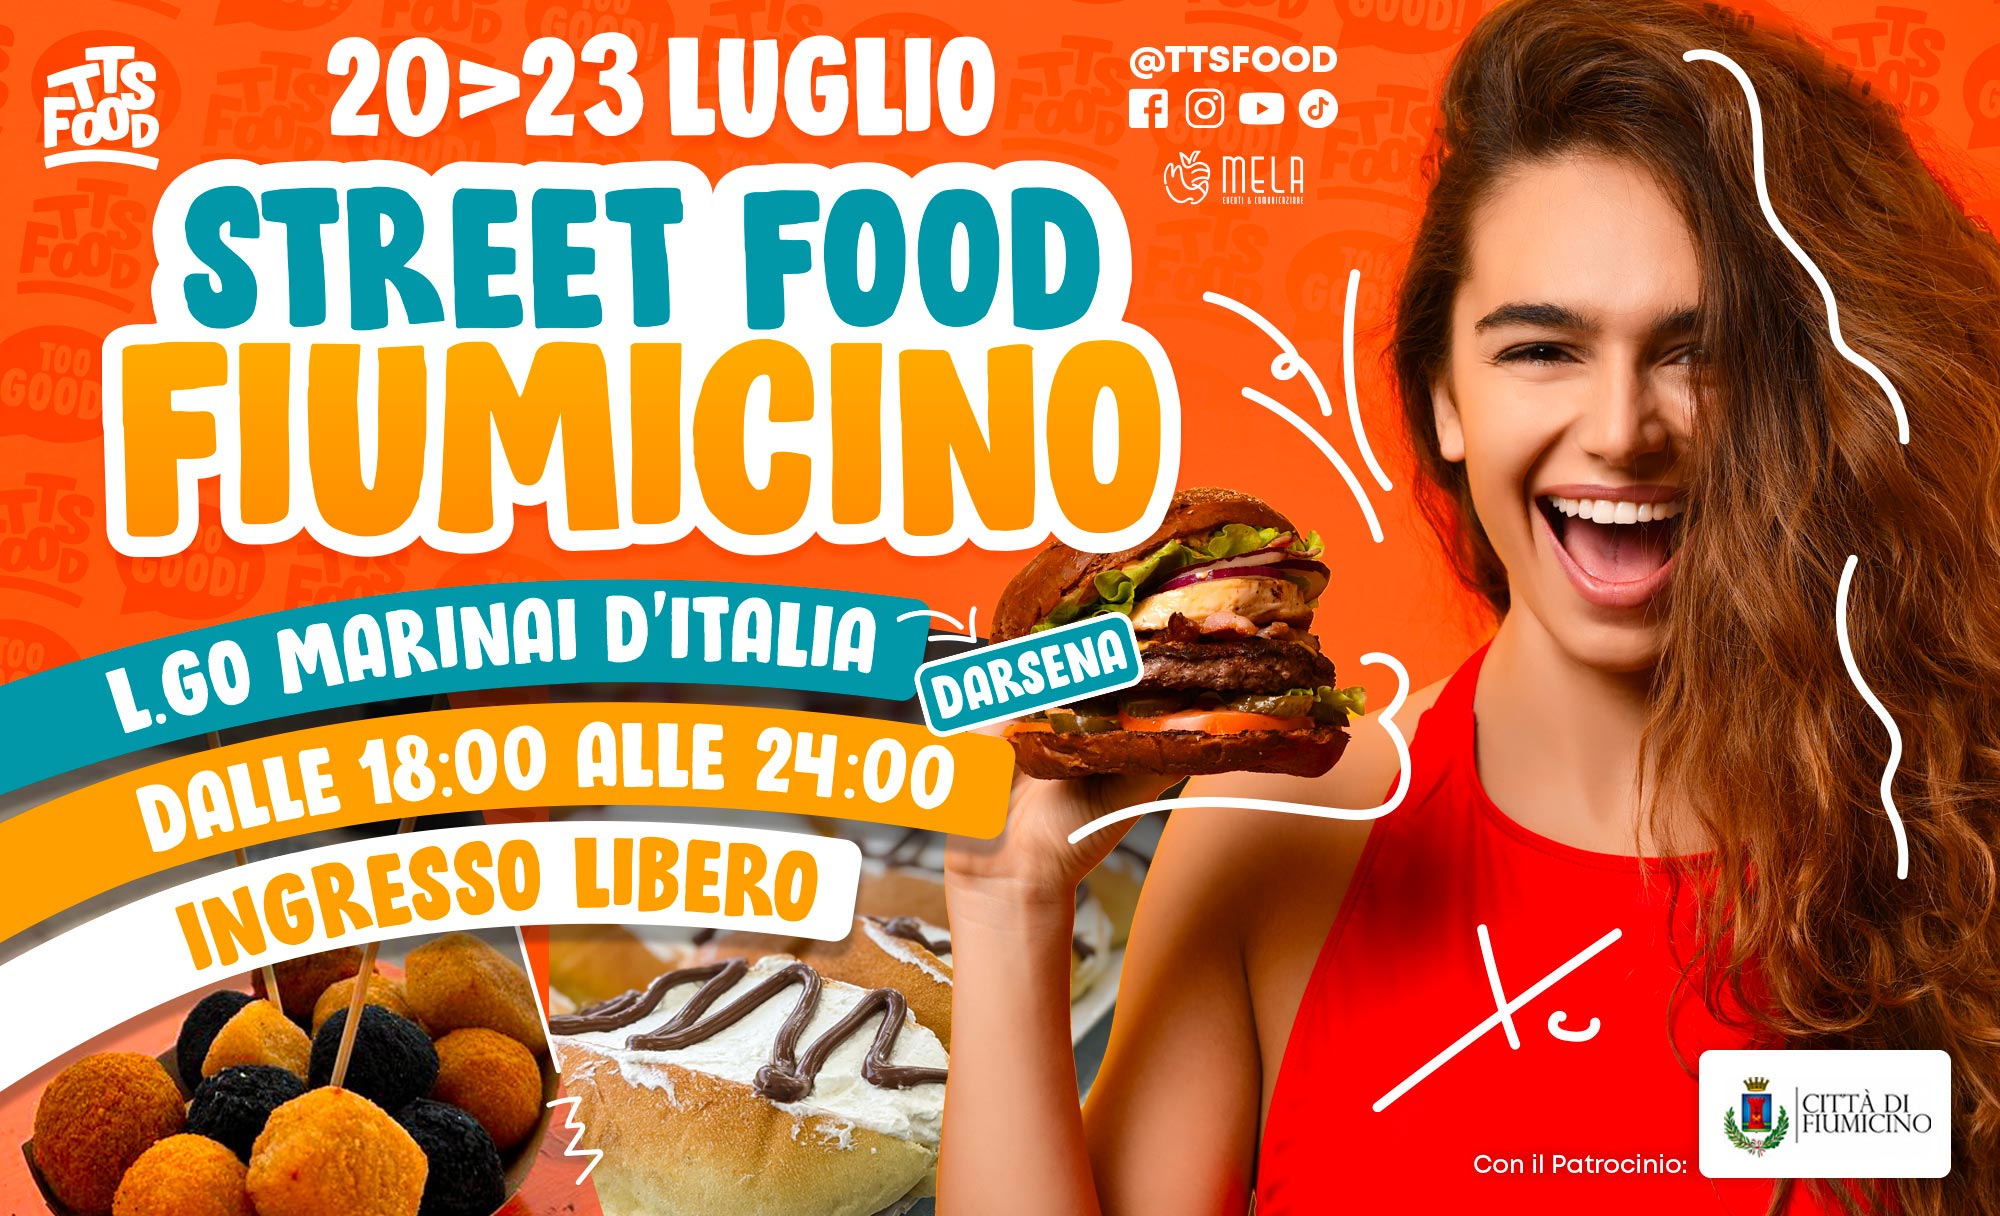 Fiumicino Street Food 20-23 Luglio